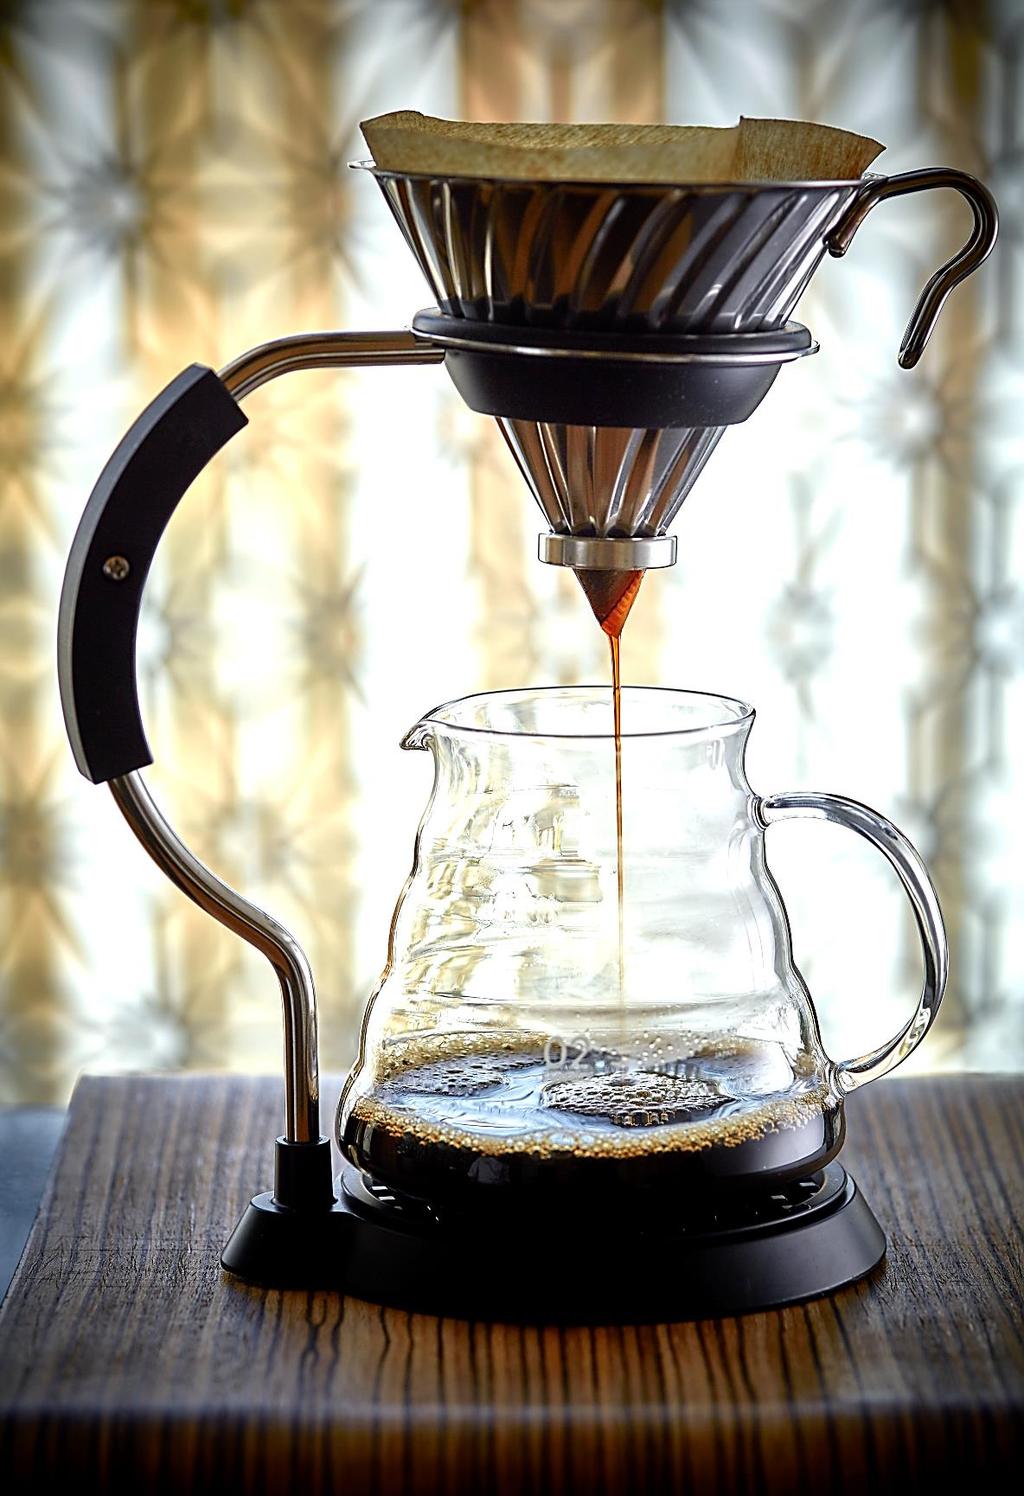 日本炭烧咖啡 JAPANESE CHARCOAL ROASTED COFFEE Your coffee without machine 如有对任何食物过敏或其他需要, 请告知服务员 Please Inform Our Service Staff If